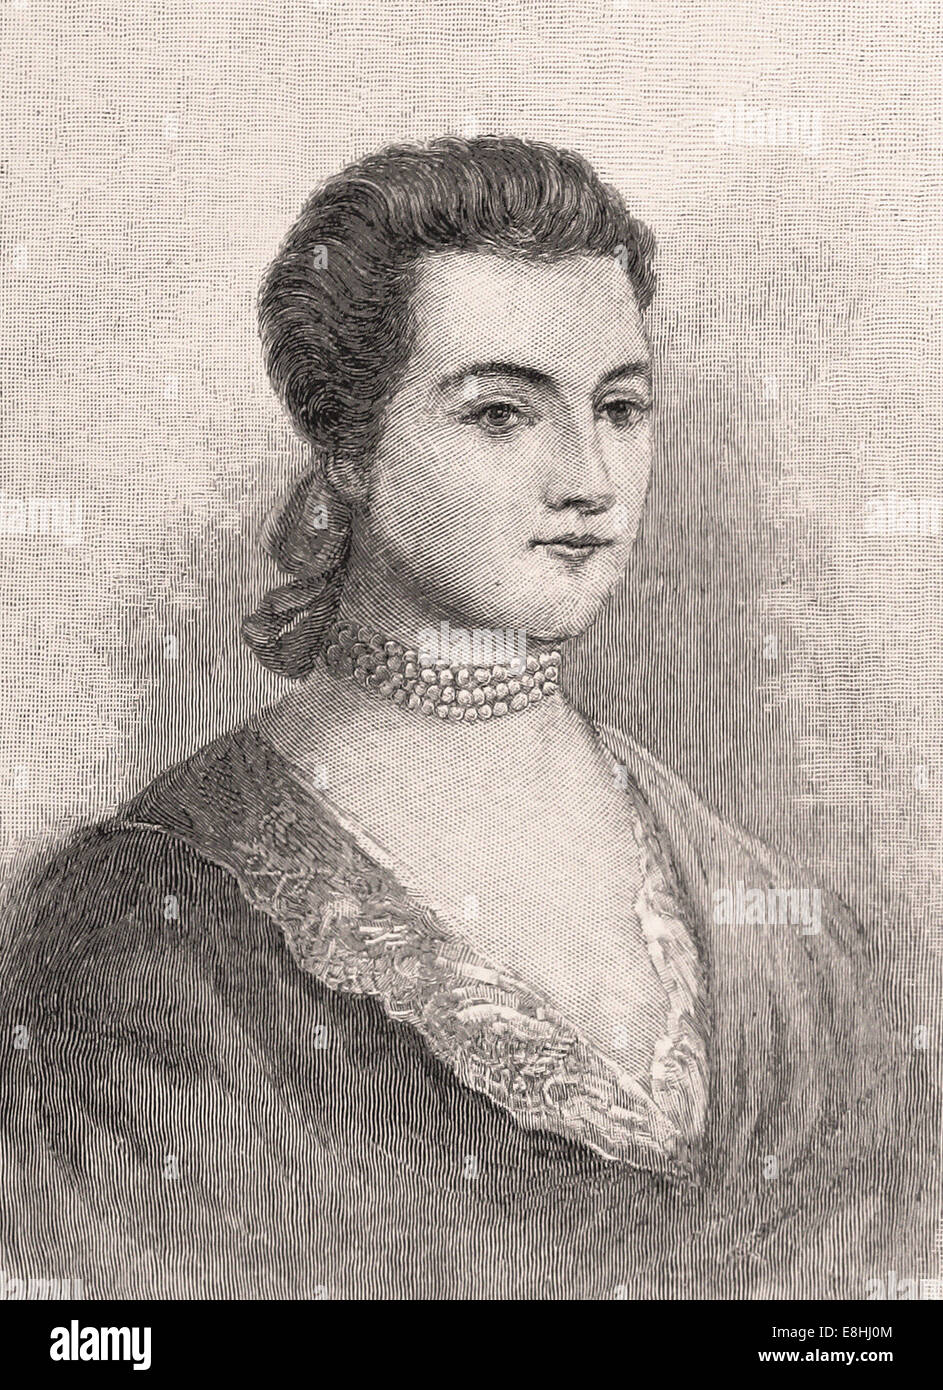 Porträt von Abigail Adams - Gravur - XIX. Jahrhundert Stockfoto